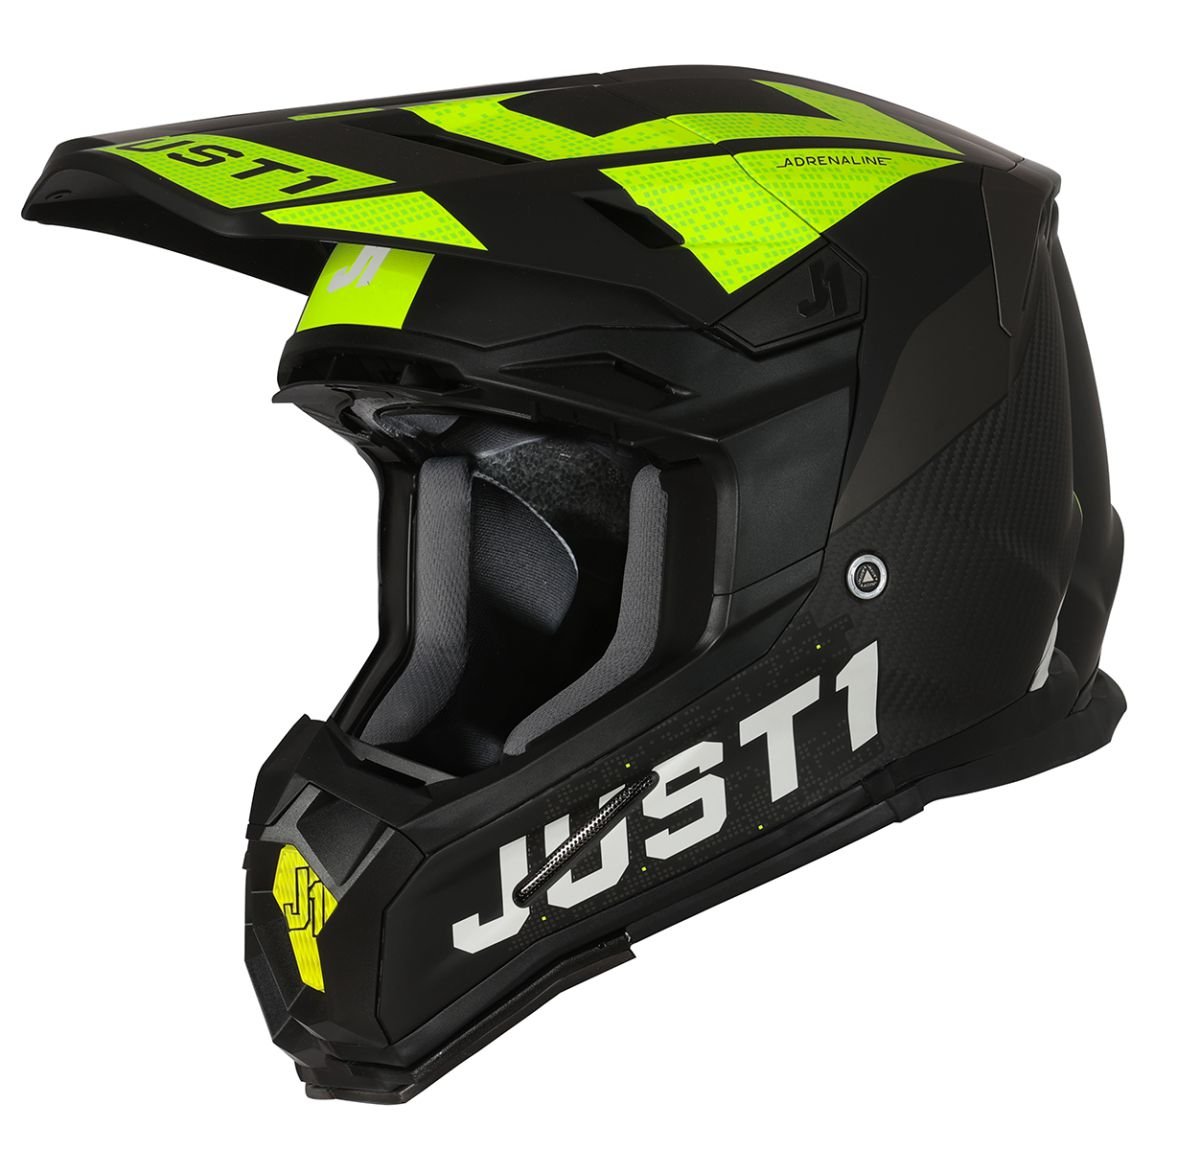 Image of Just1 Helmet J-22 Adrenaline Noir Jaune Fluo Carbon Mat Casque Cross Taille XL